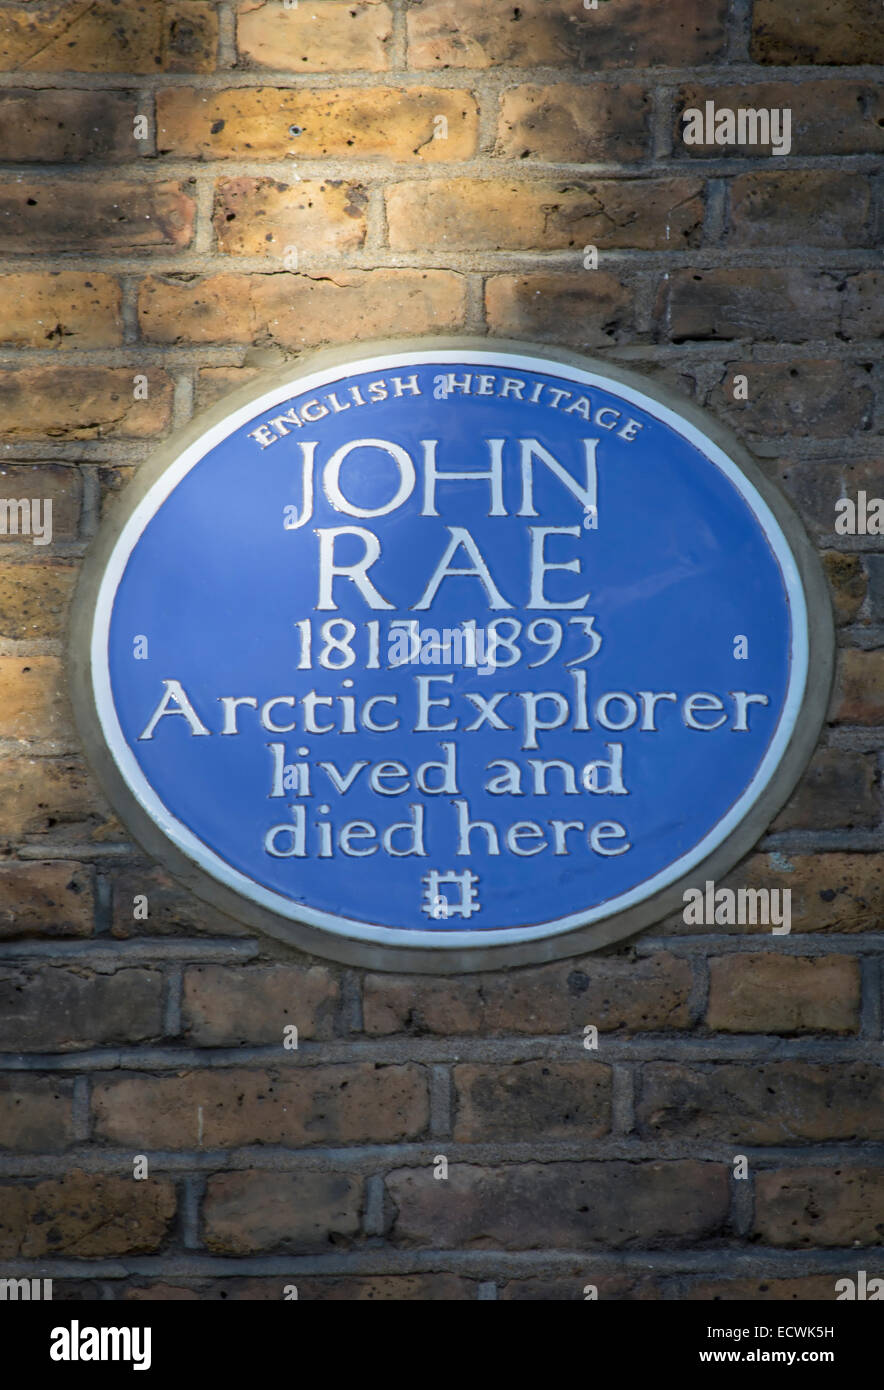 english heritage blue plaque marking a home  and death site of arctic explorer john rae, kensington, london, england Stock Photo